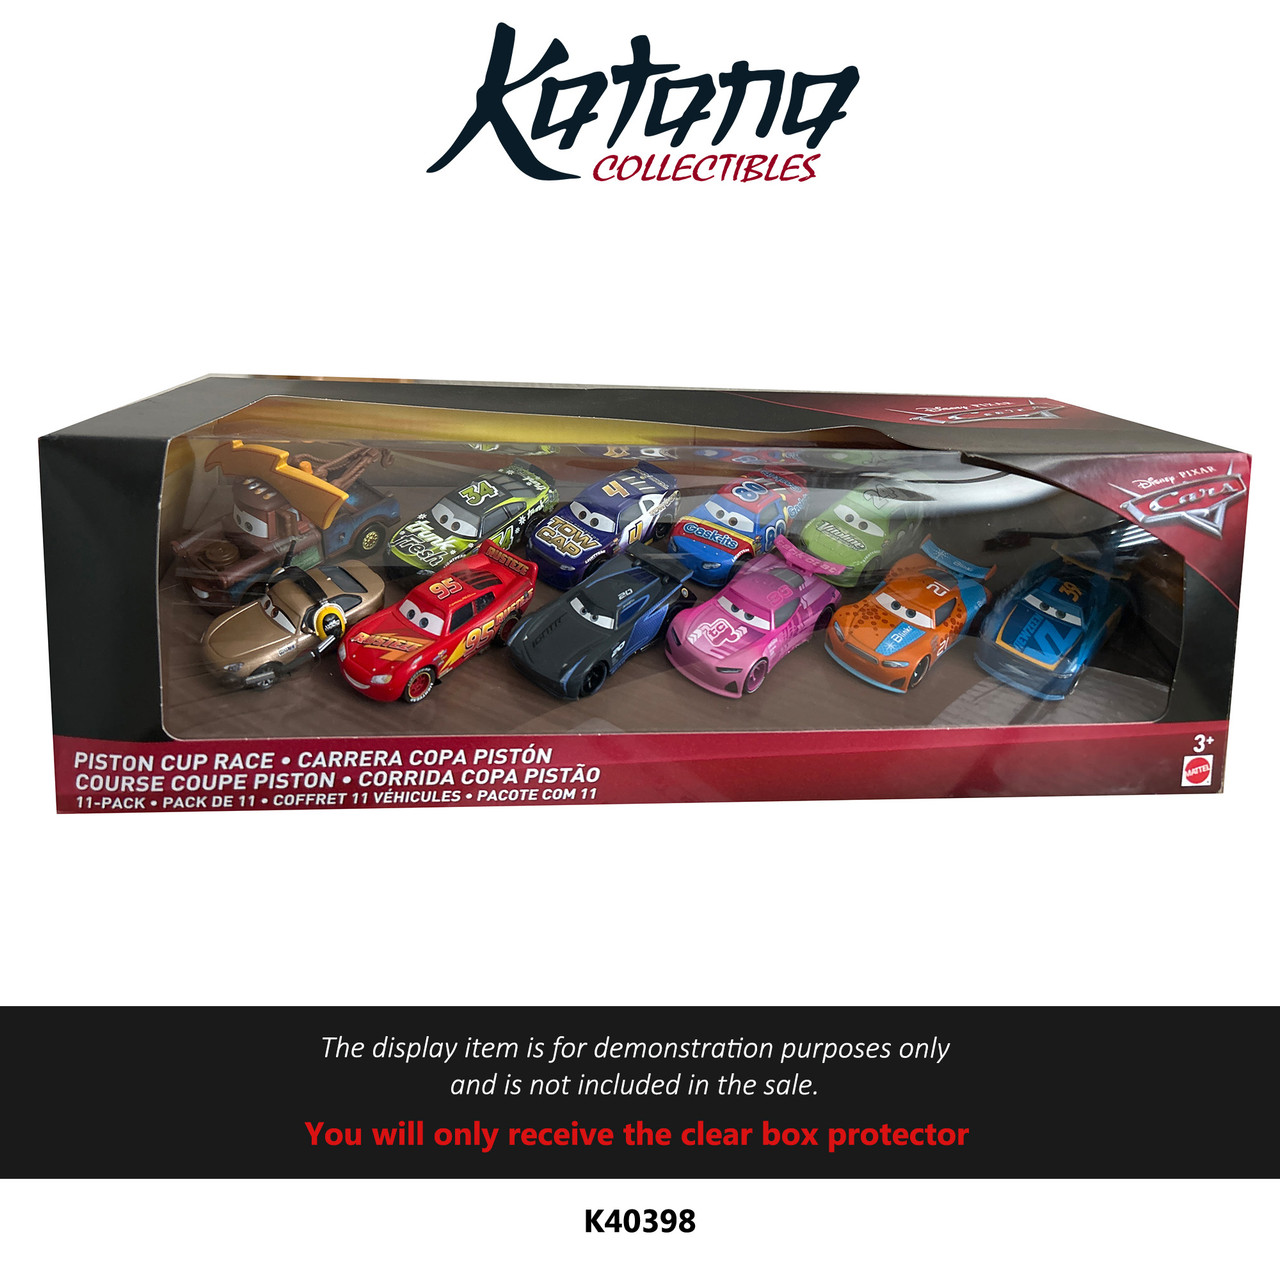 Katana Collectibles Protector For Mattel Disney Cars - Piston Cup Race